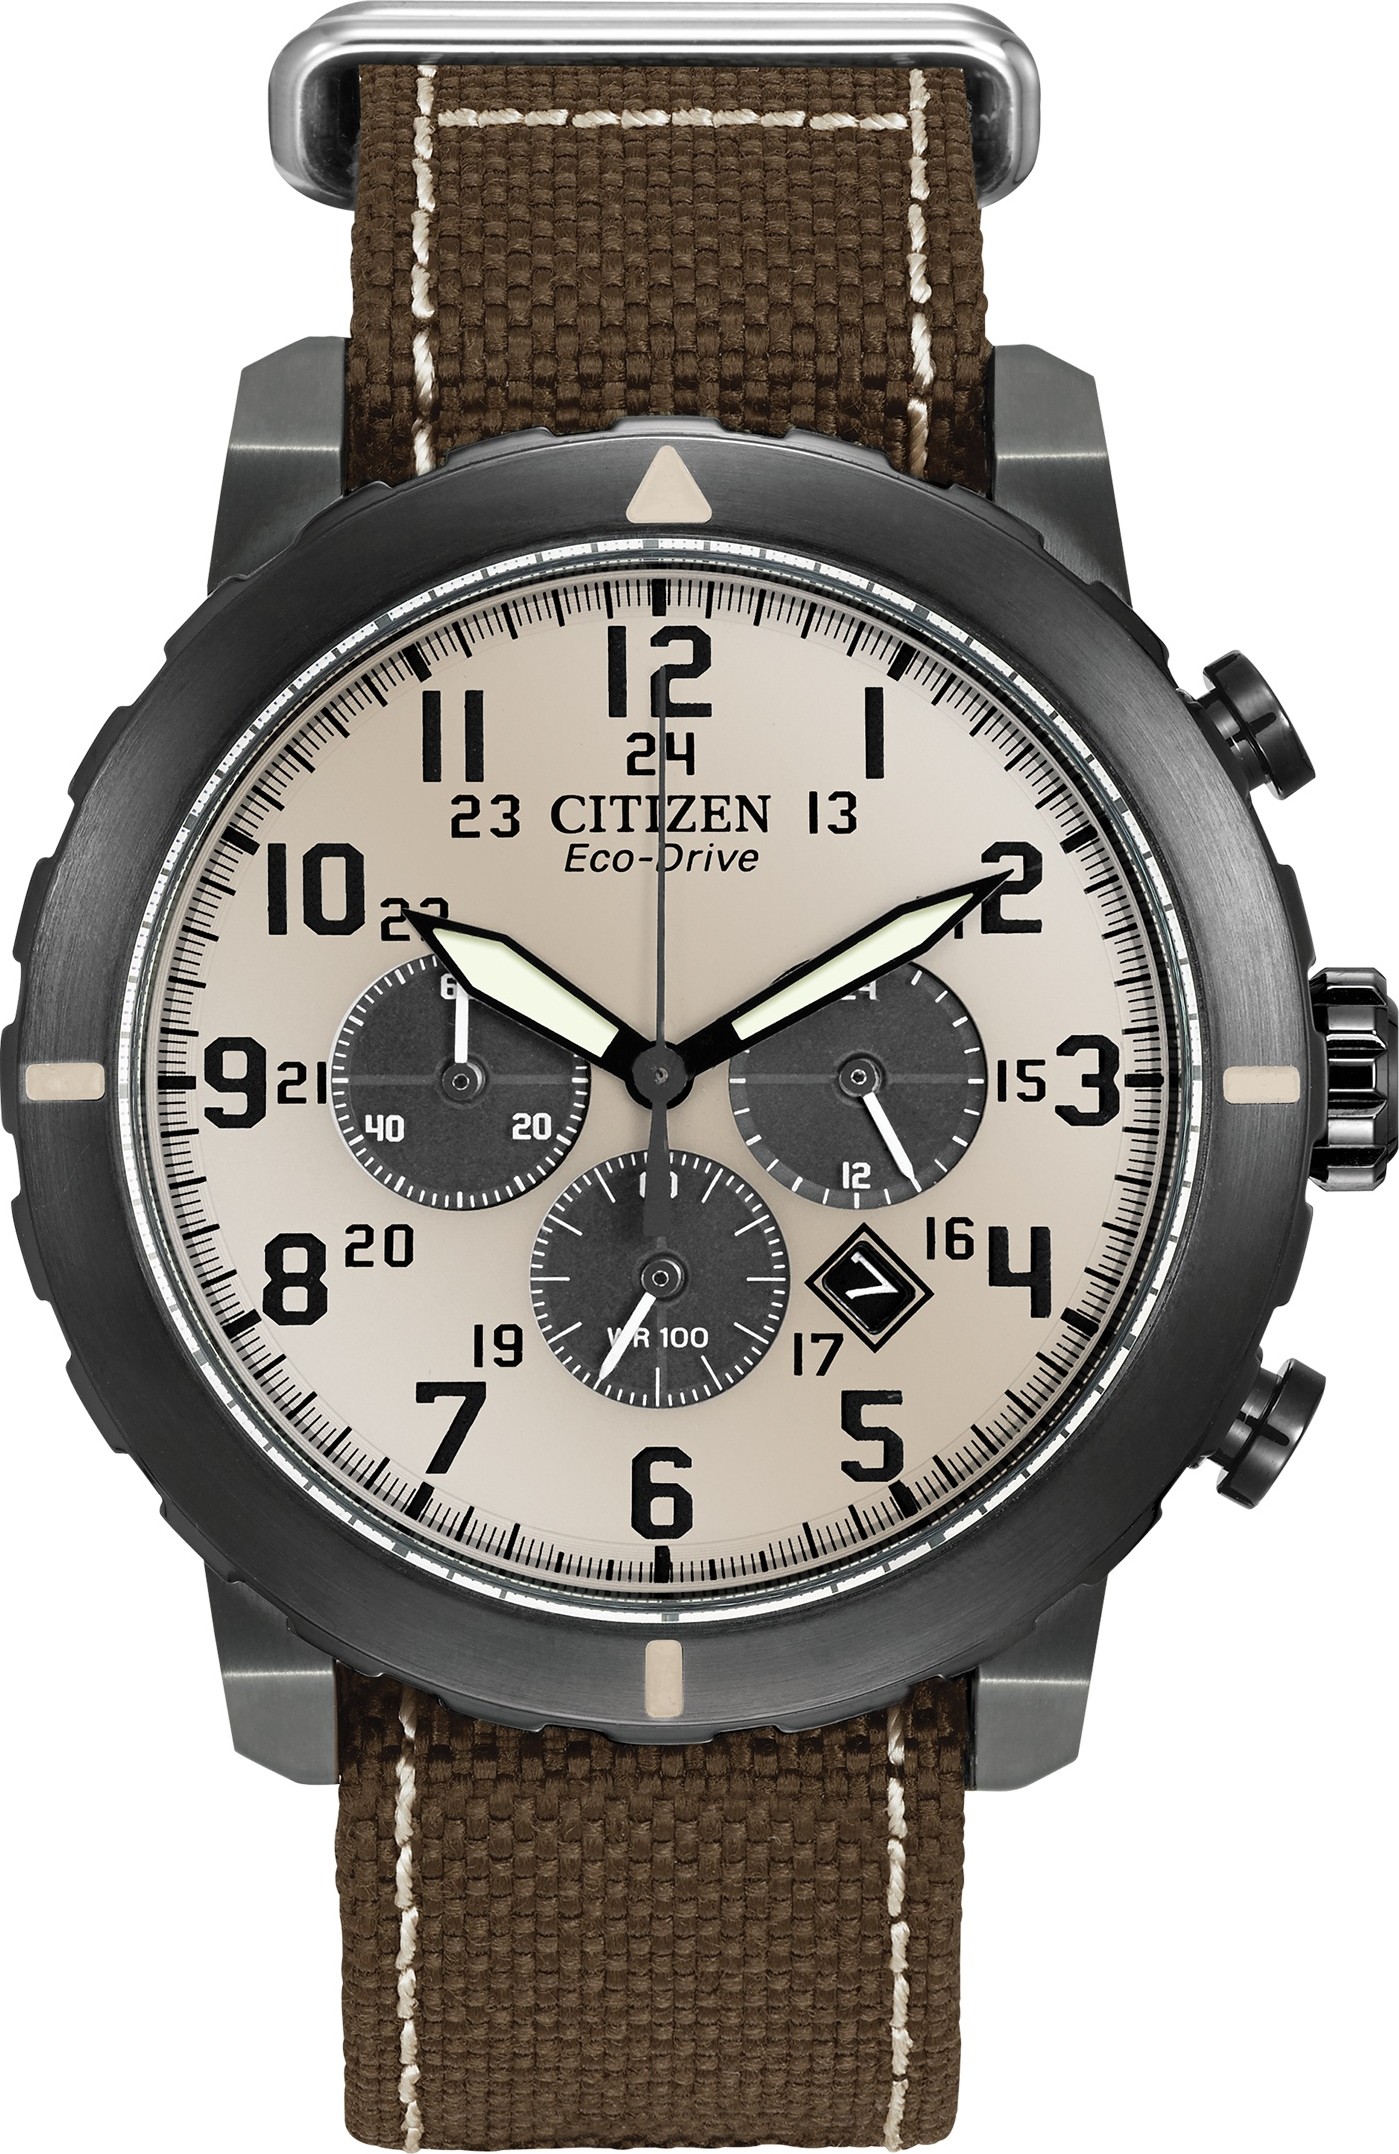 Arriba 75+ imagen citizen stainless steel watch - Abzlocal.mx